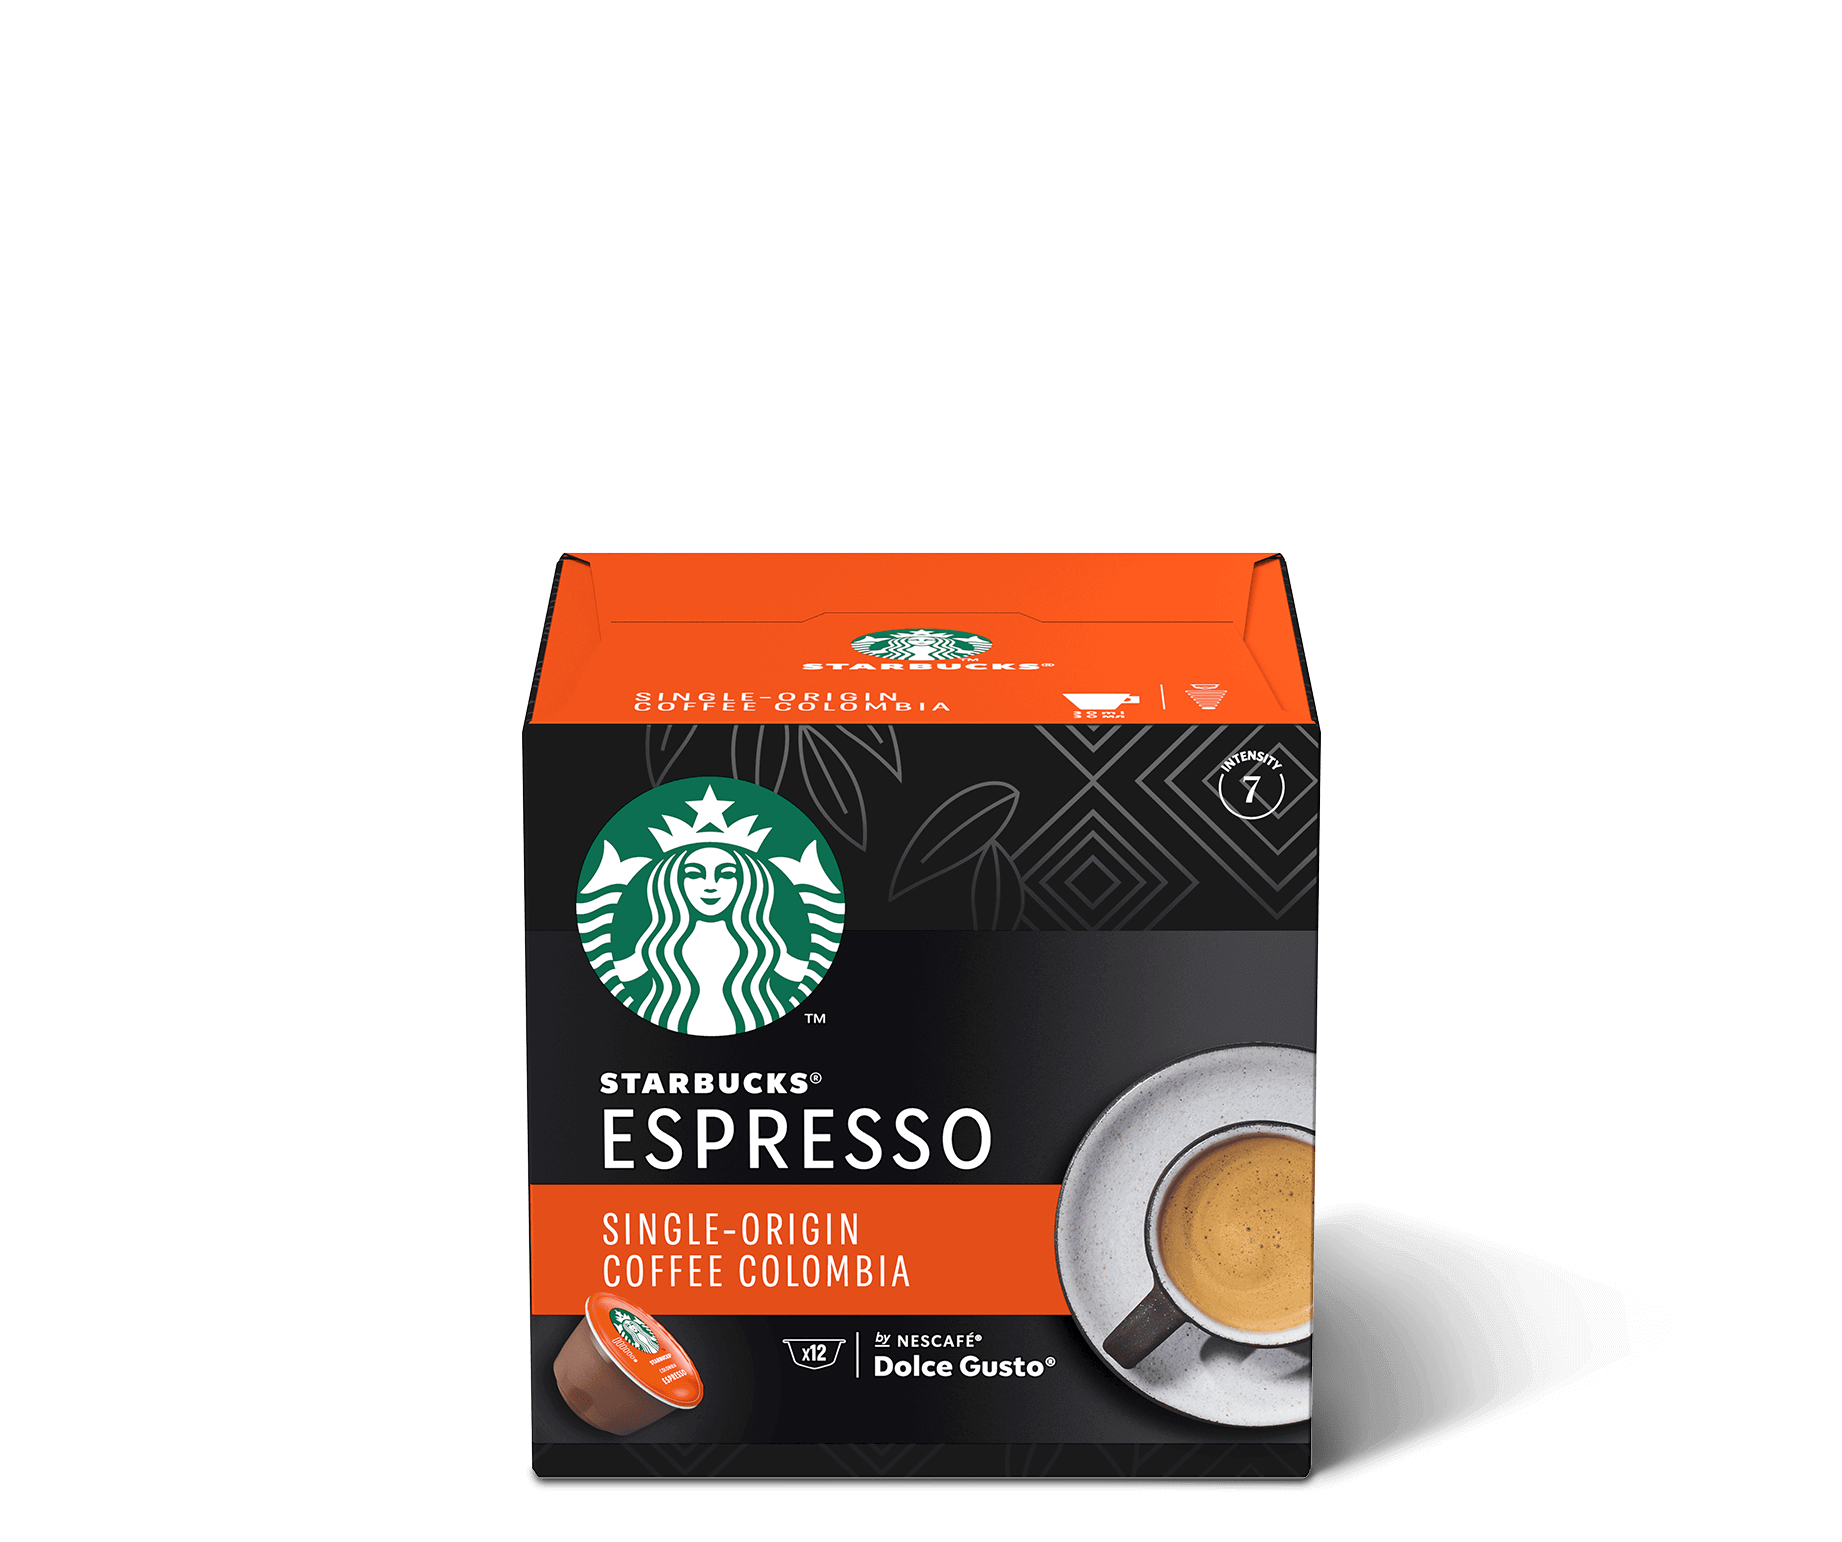 Starbucks Colombia Espresso - 12 Capsules for Dolce Gusto for £3.70.